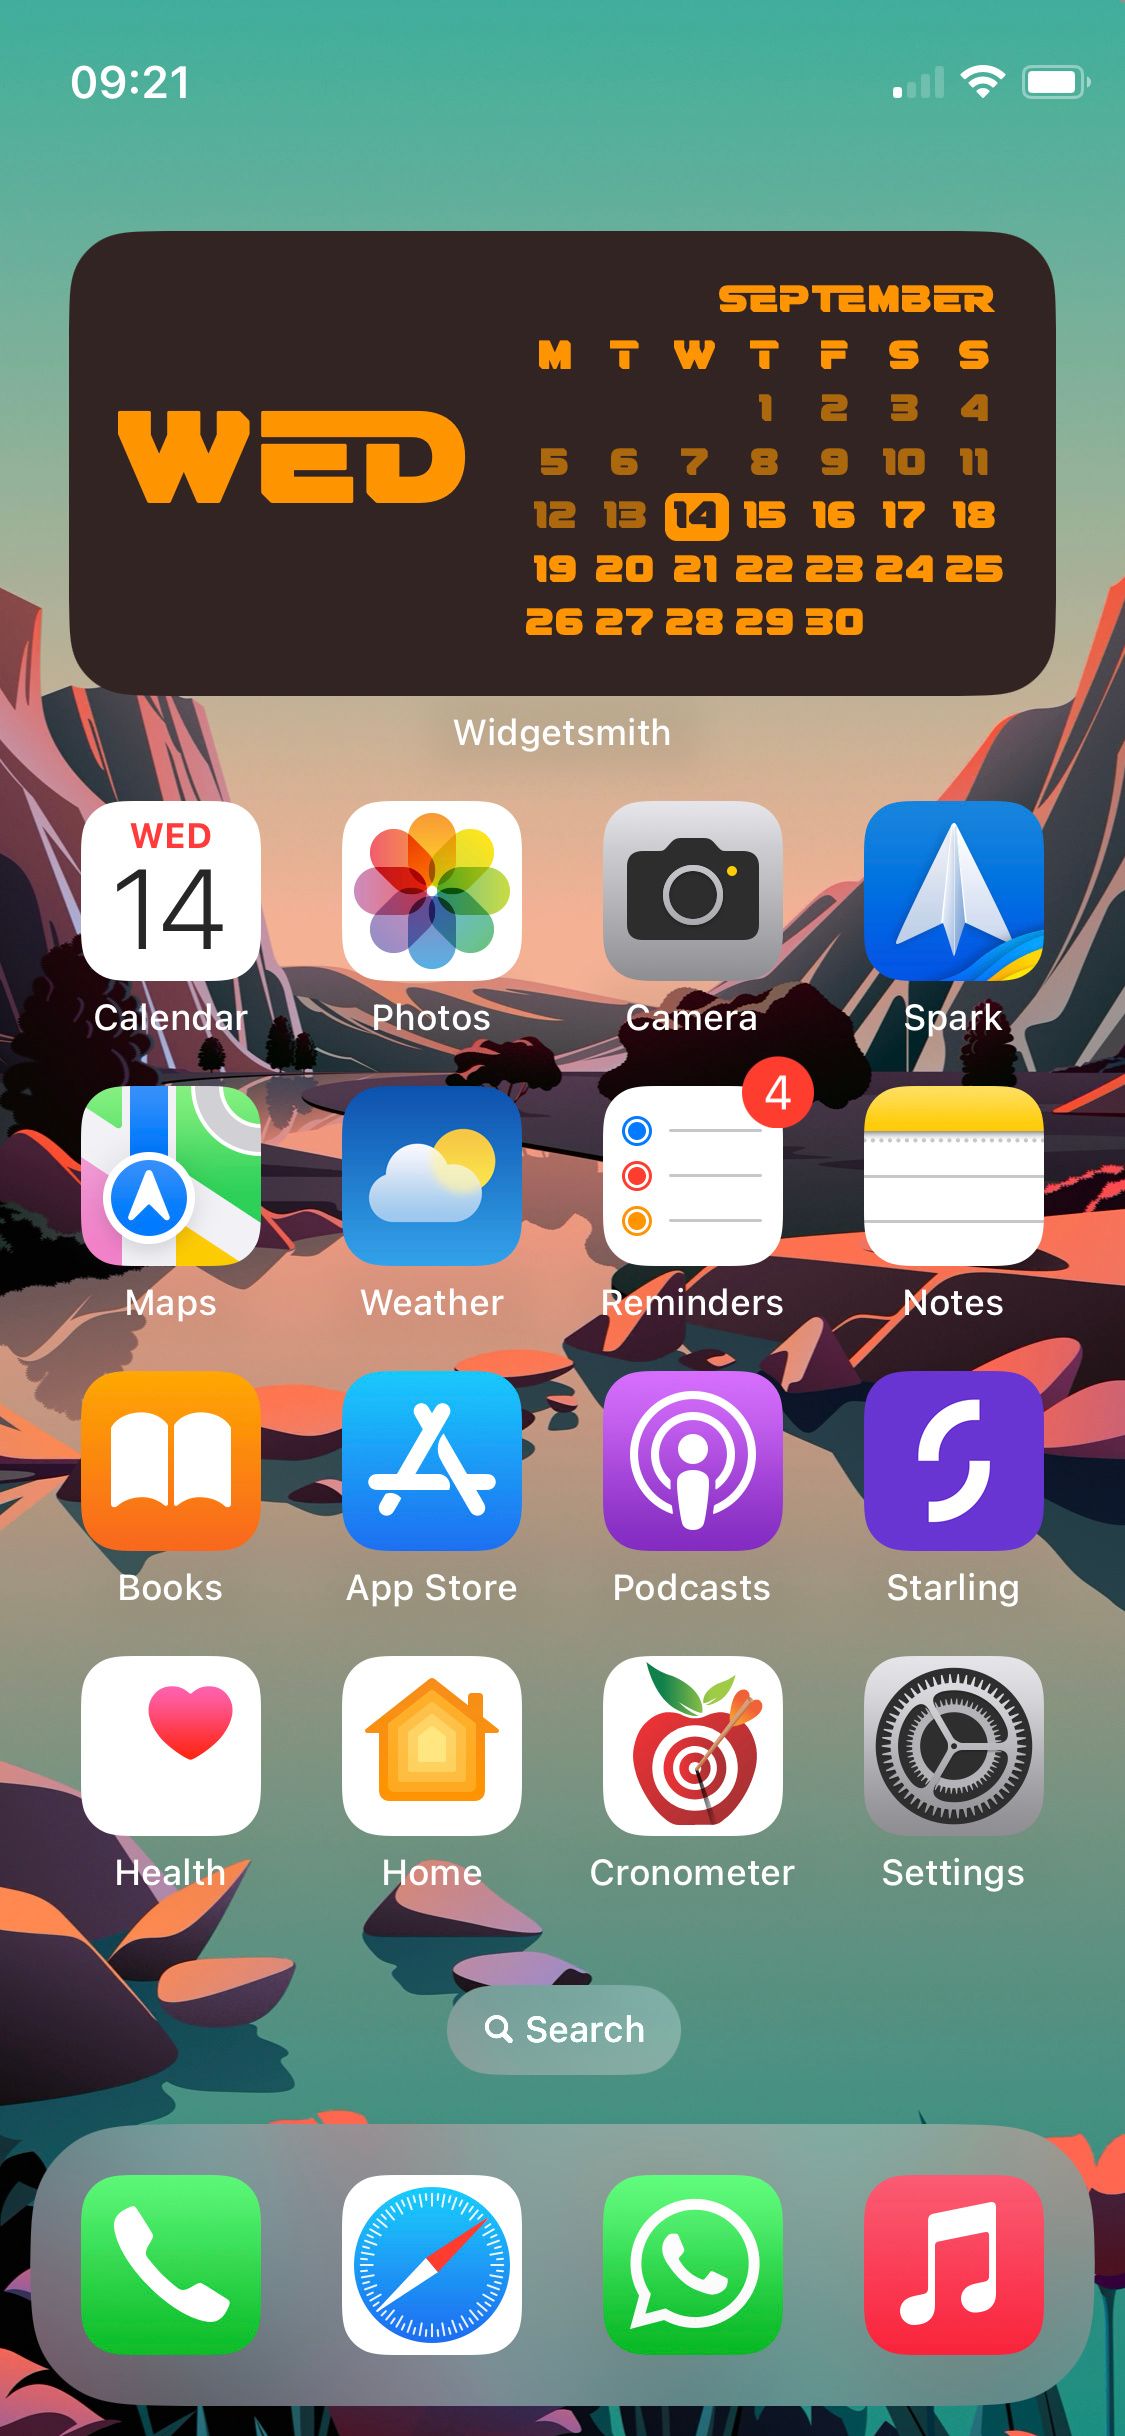 Widgetsmith app on an iPhone Home Screen